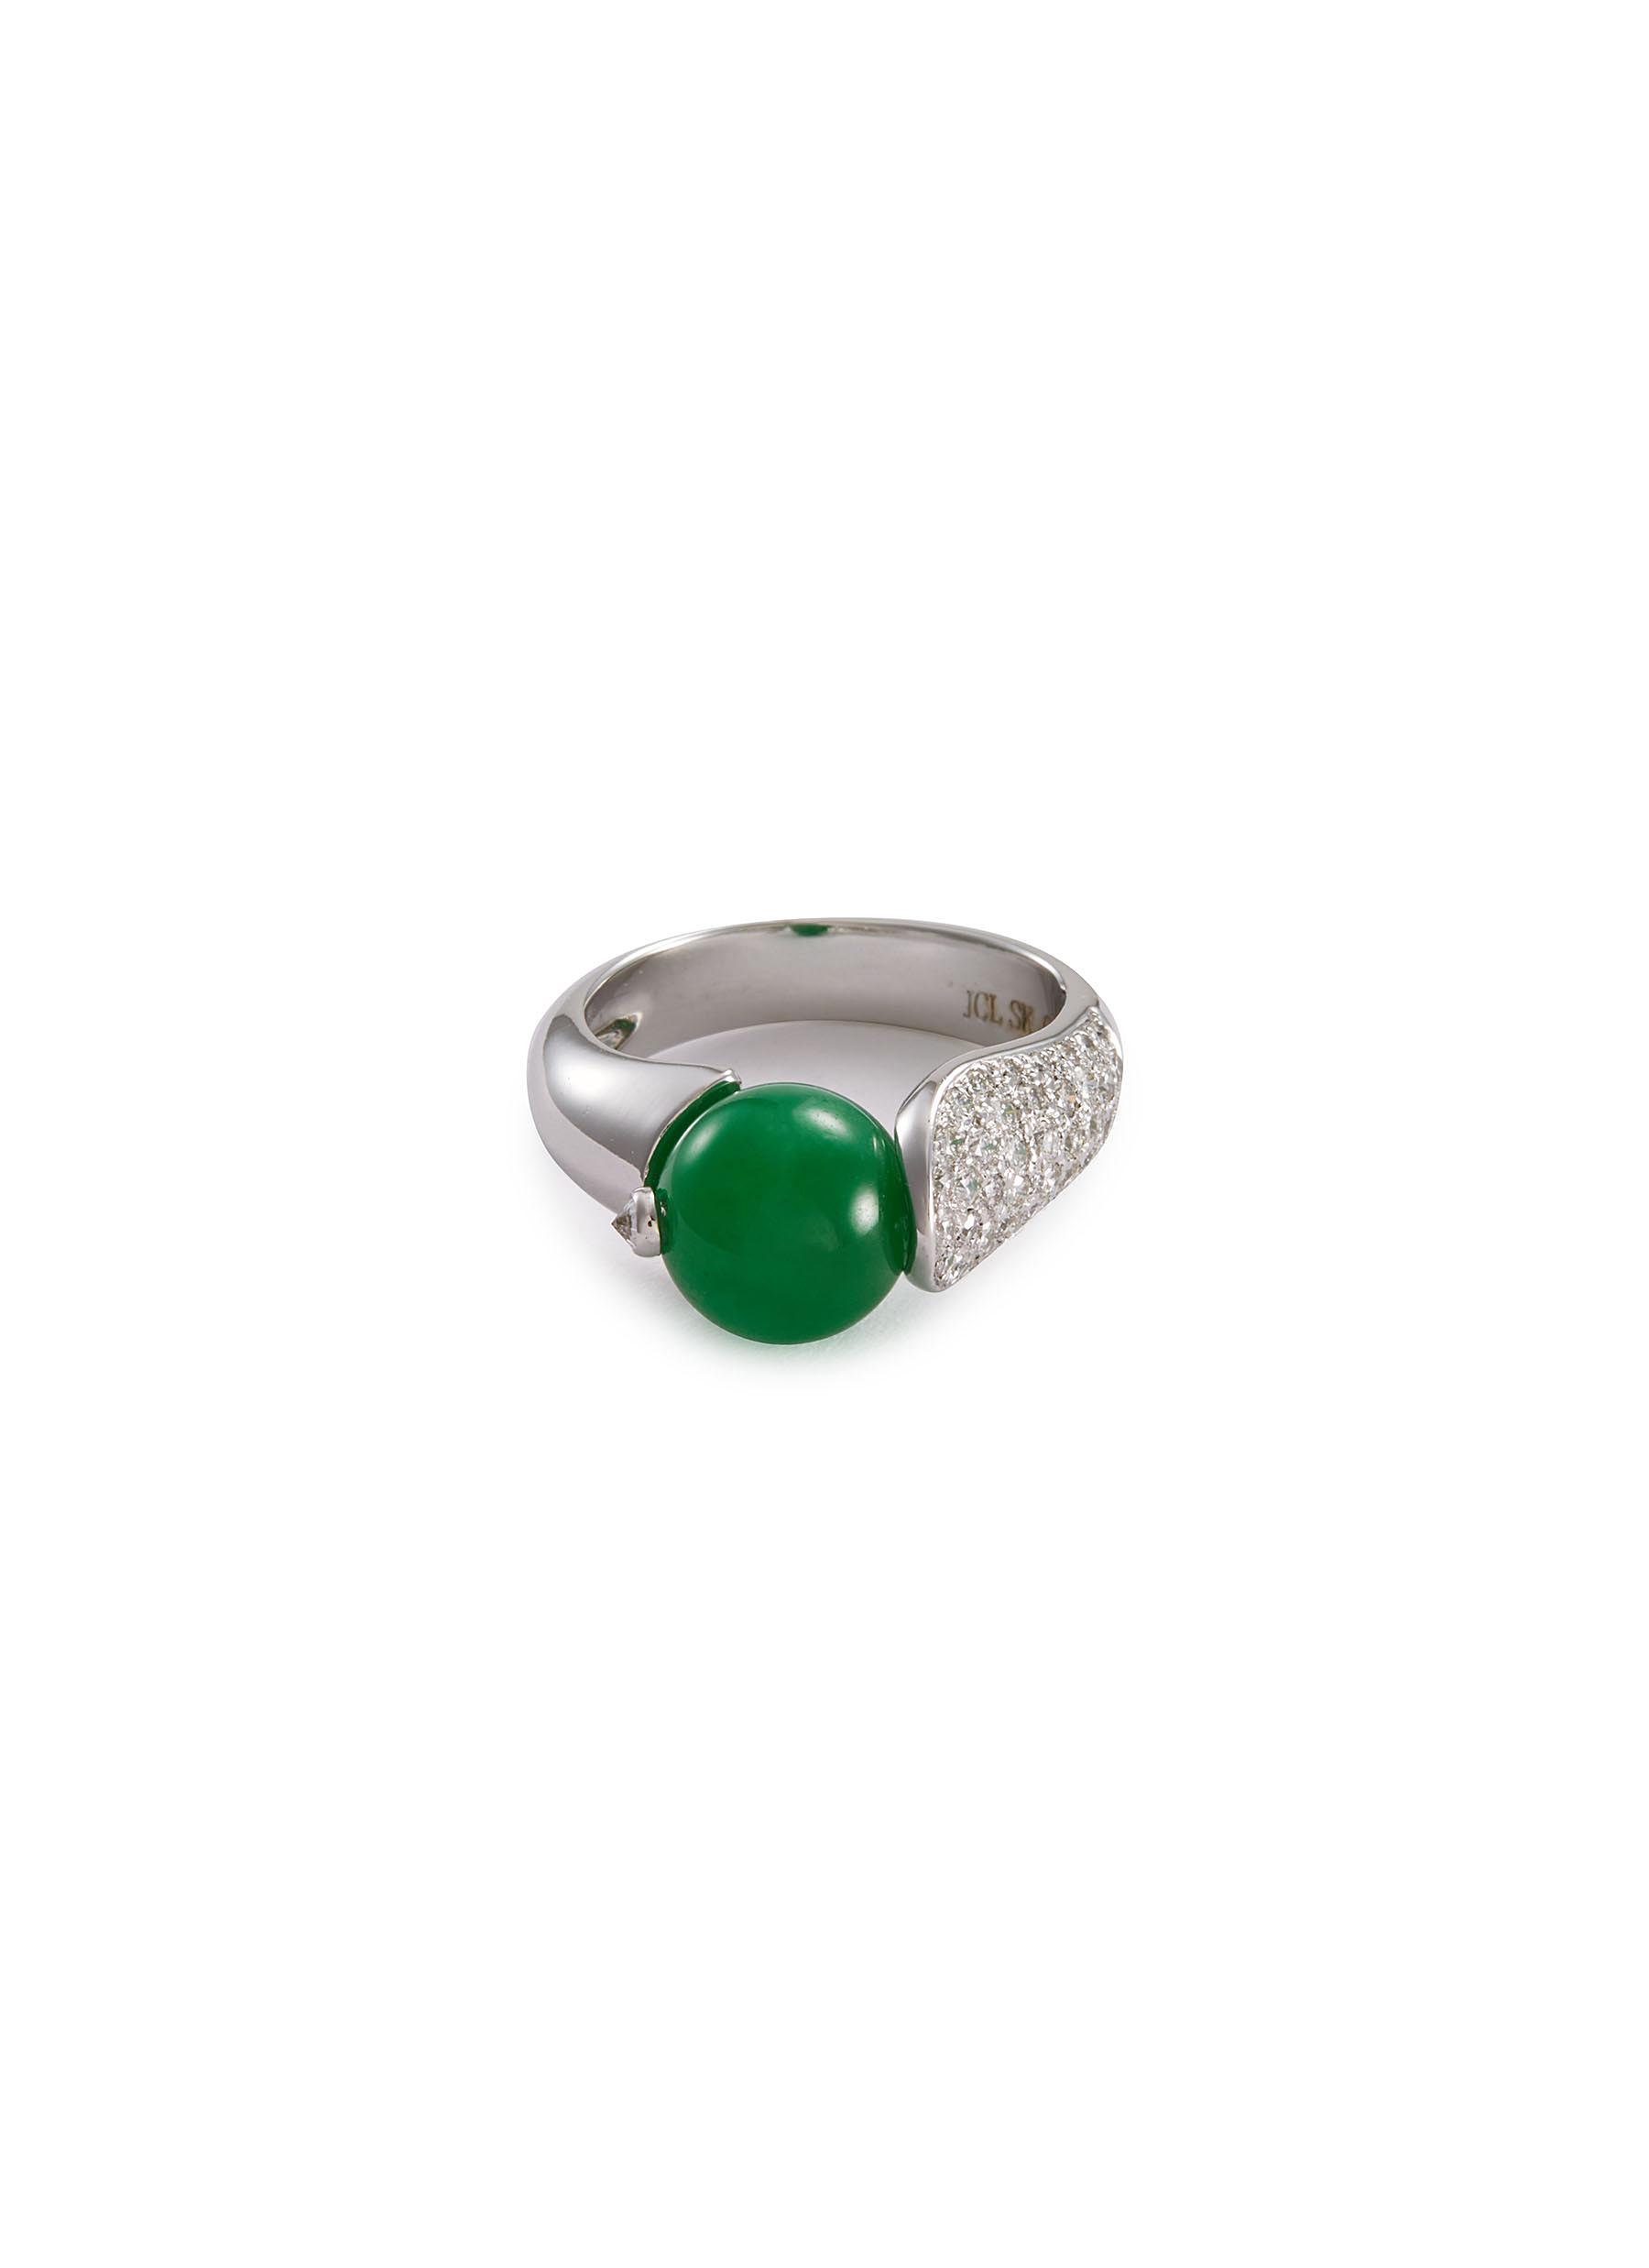 Diamond jade 18k white gold ring